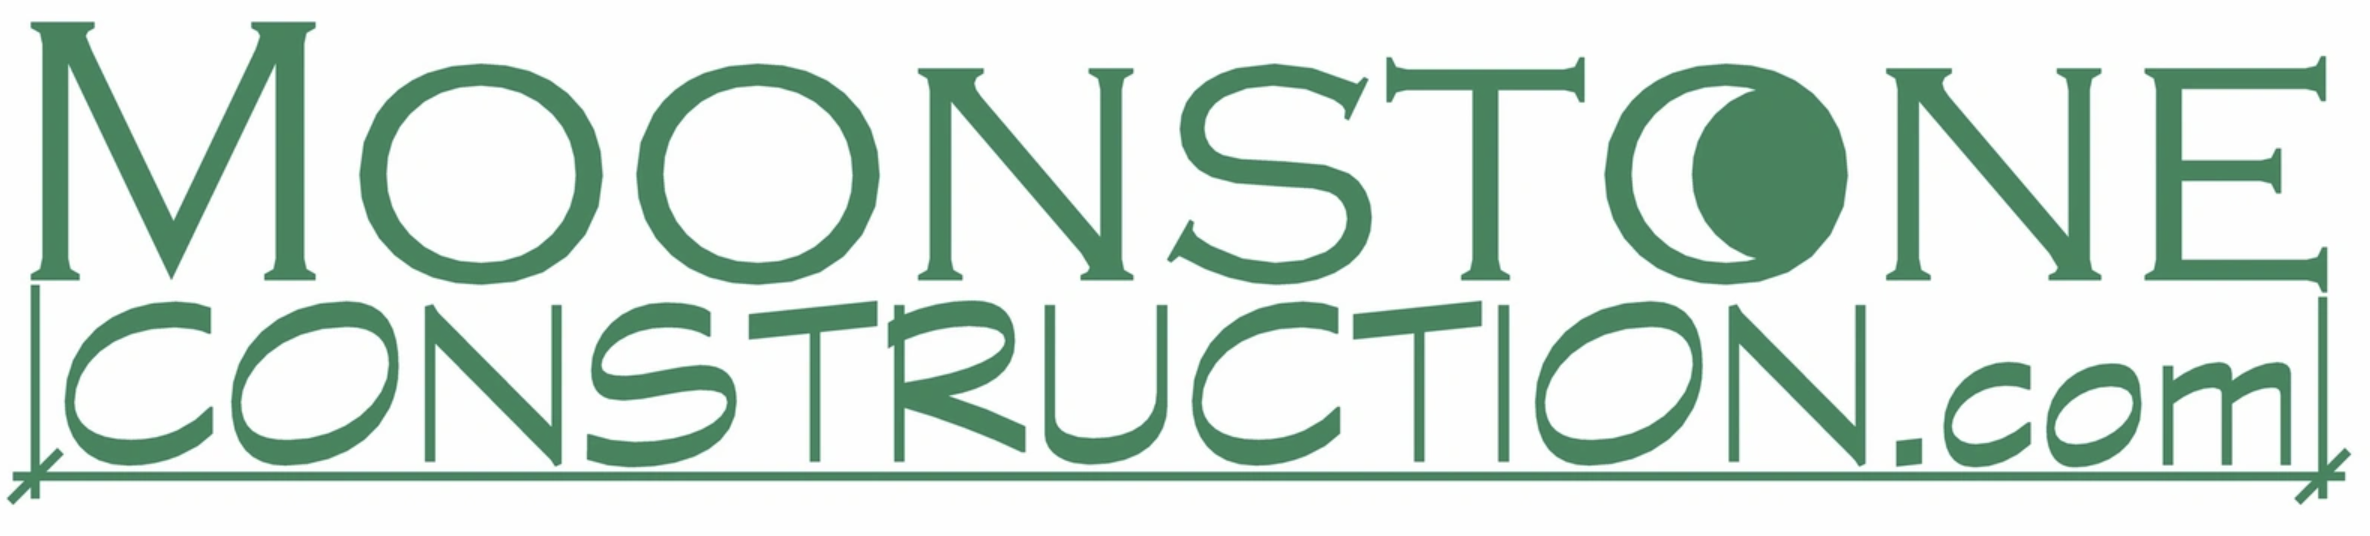 Moonstone Construction and Development Inc Logo